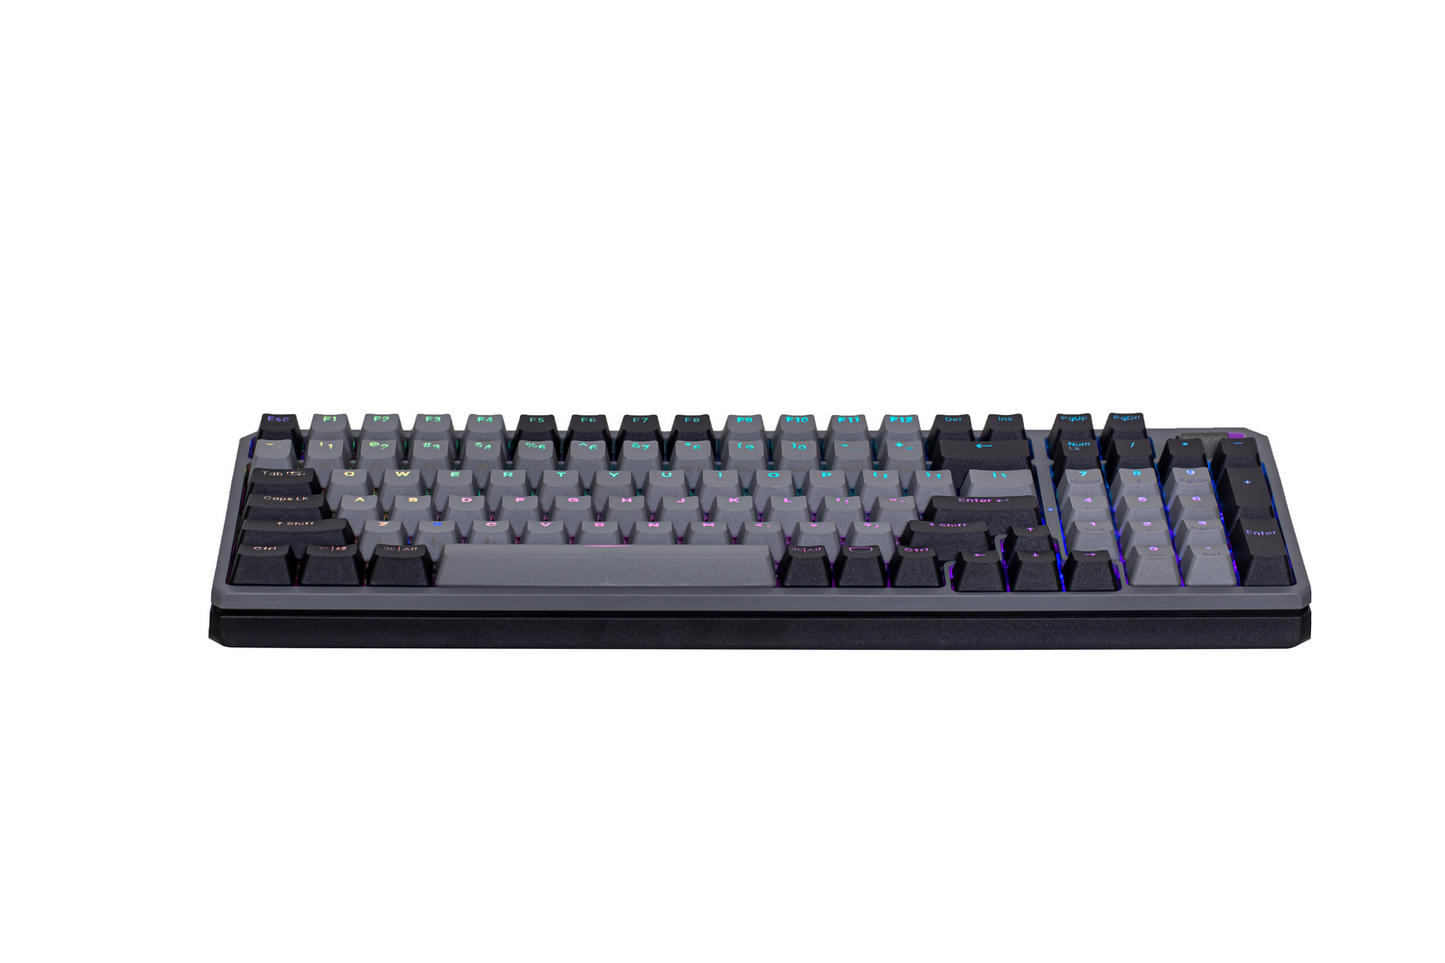 Cooler Master MK770 Space Gray Wireless Mechanical RGB Gaming Keyboard - IT Layout